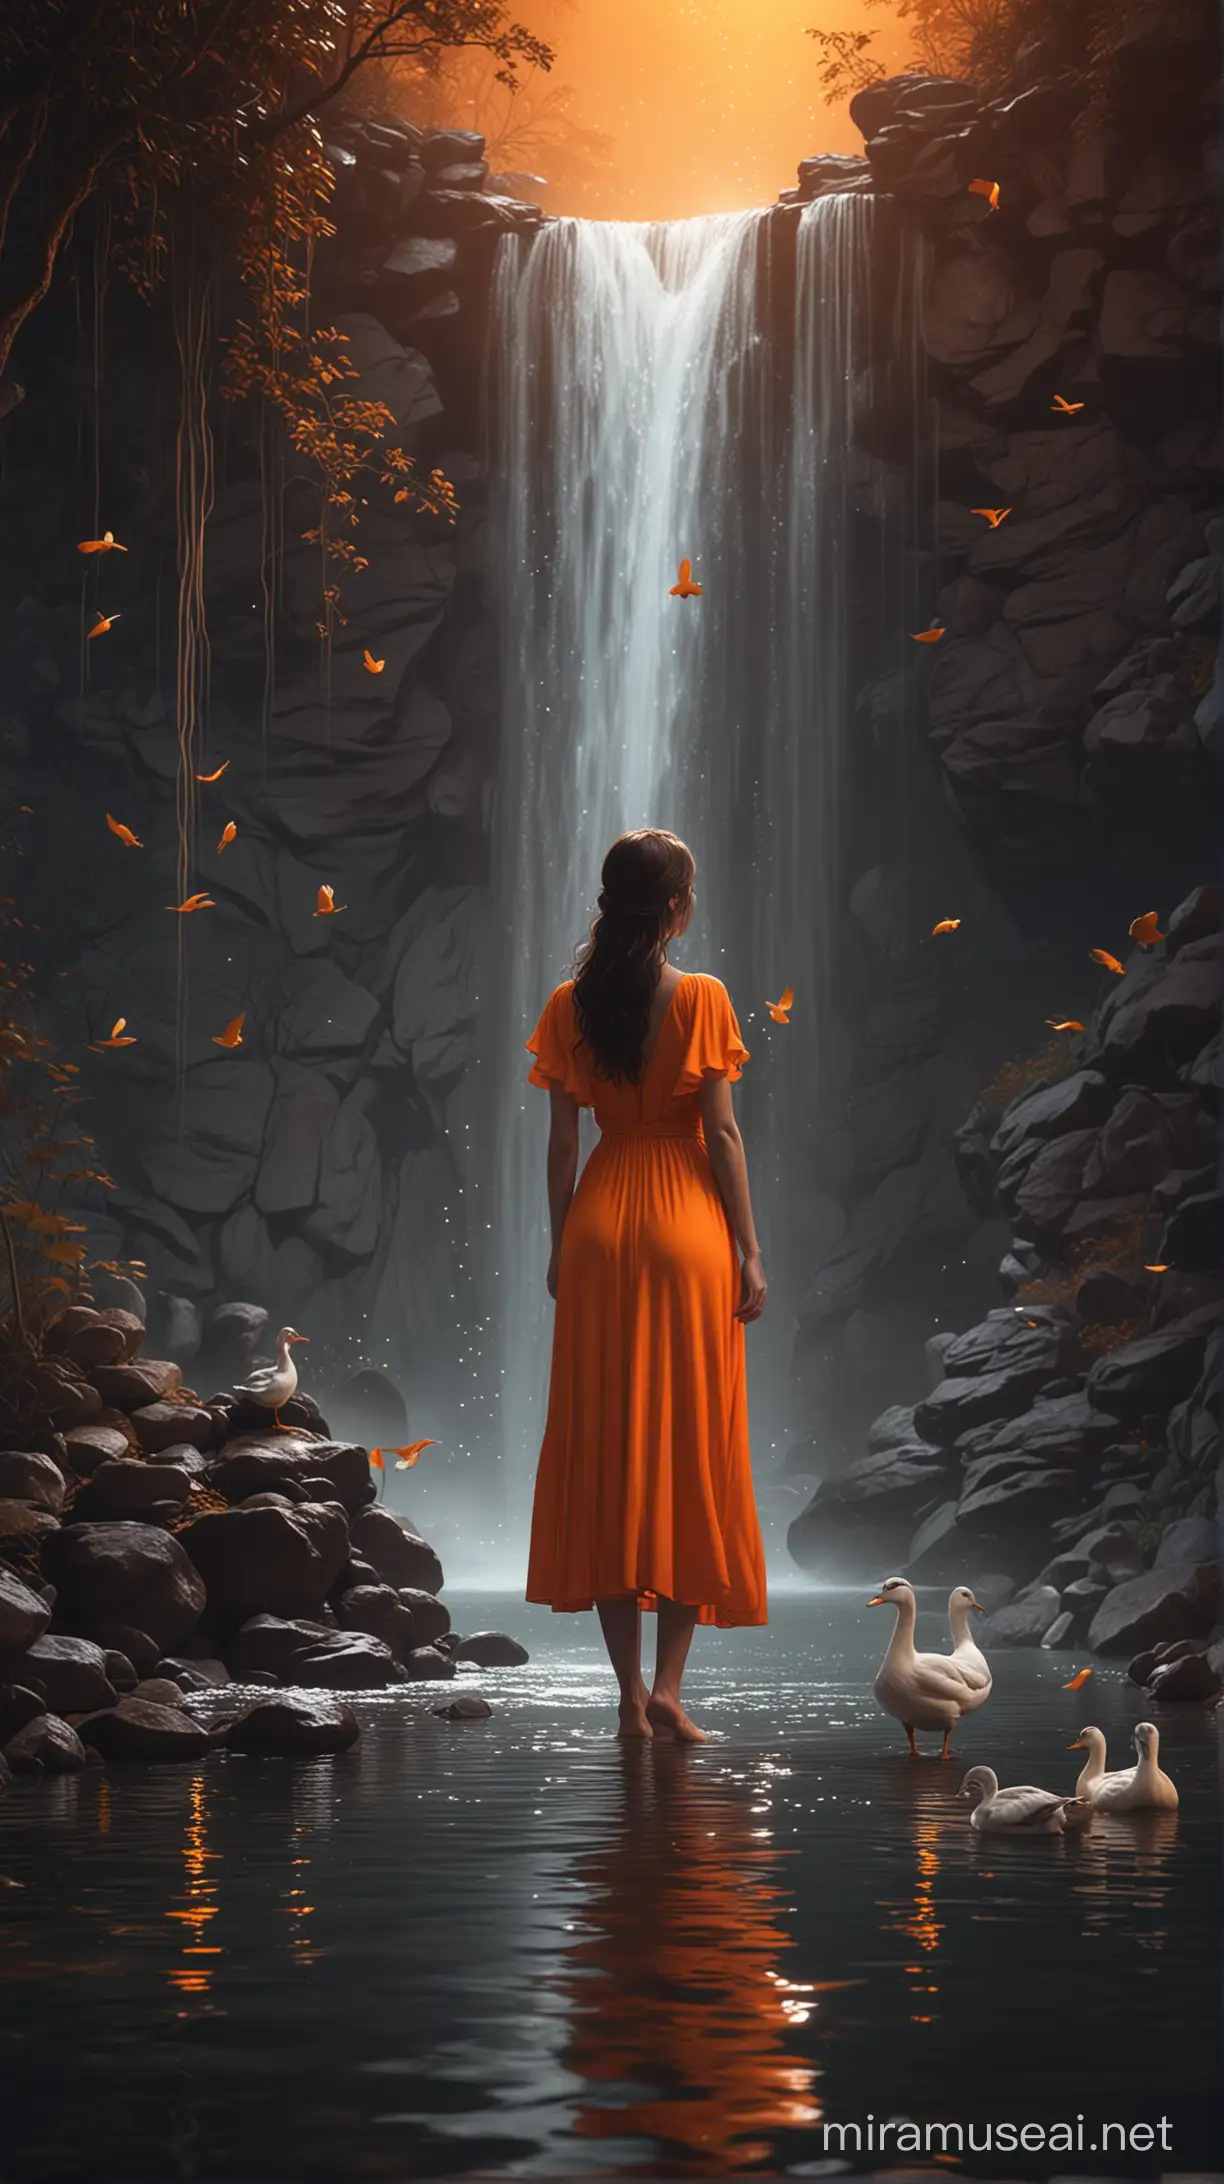 Stunning 8K Minimal Illustration Woman in Orange Gown Graces Midnight Waterside with Glittering Ducks